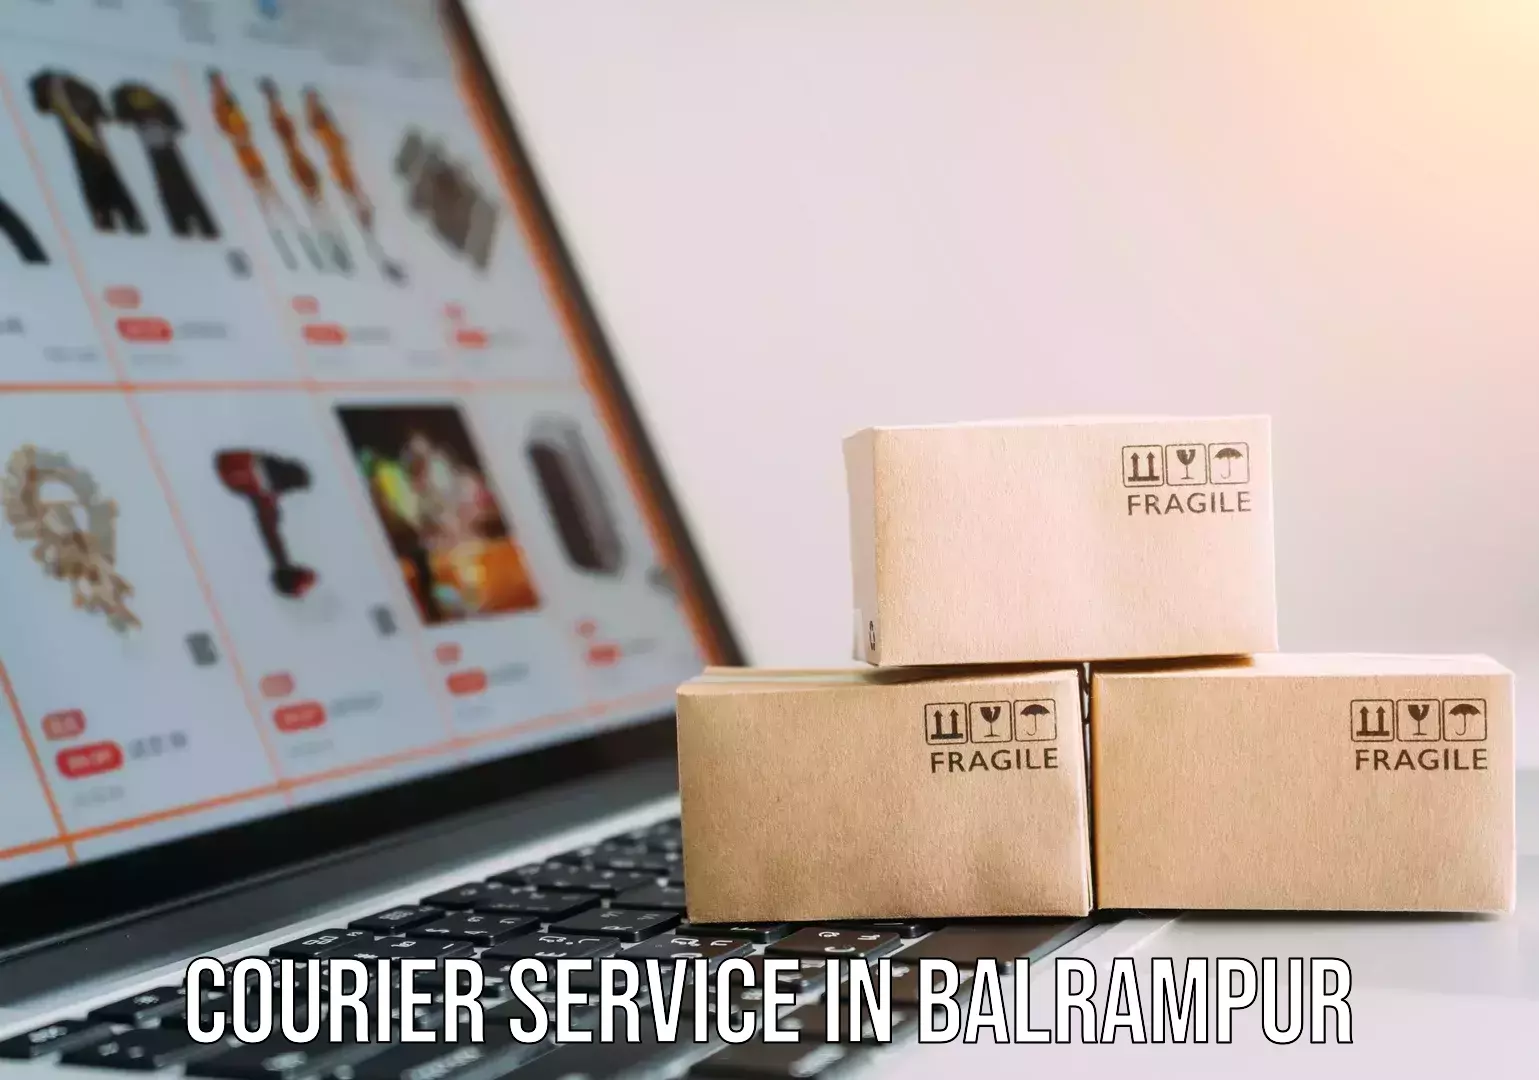 Global logistics network in Balrampur